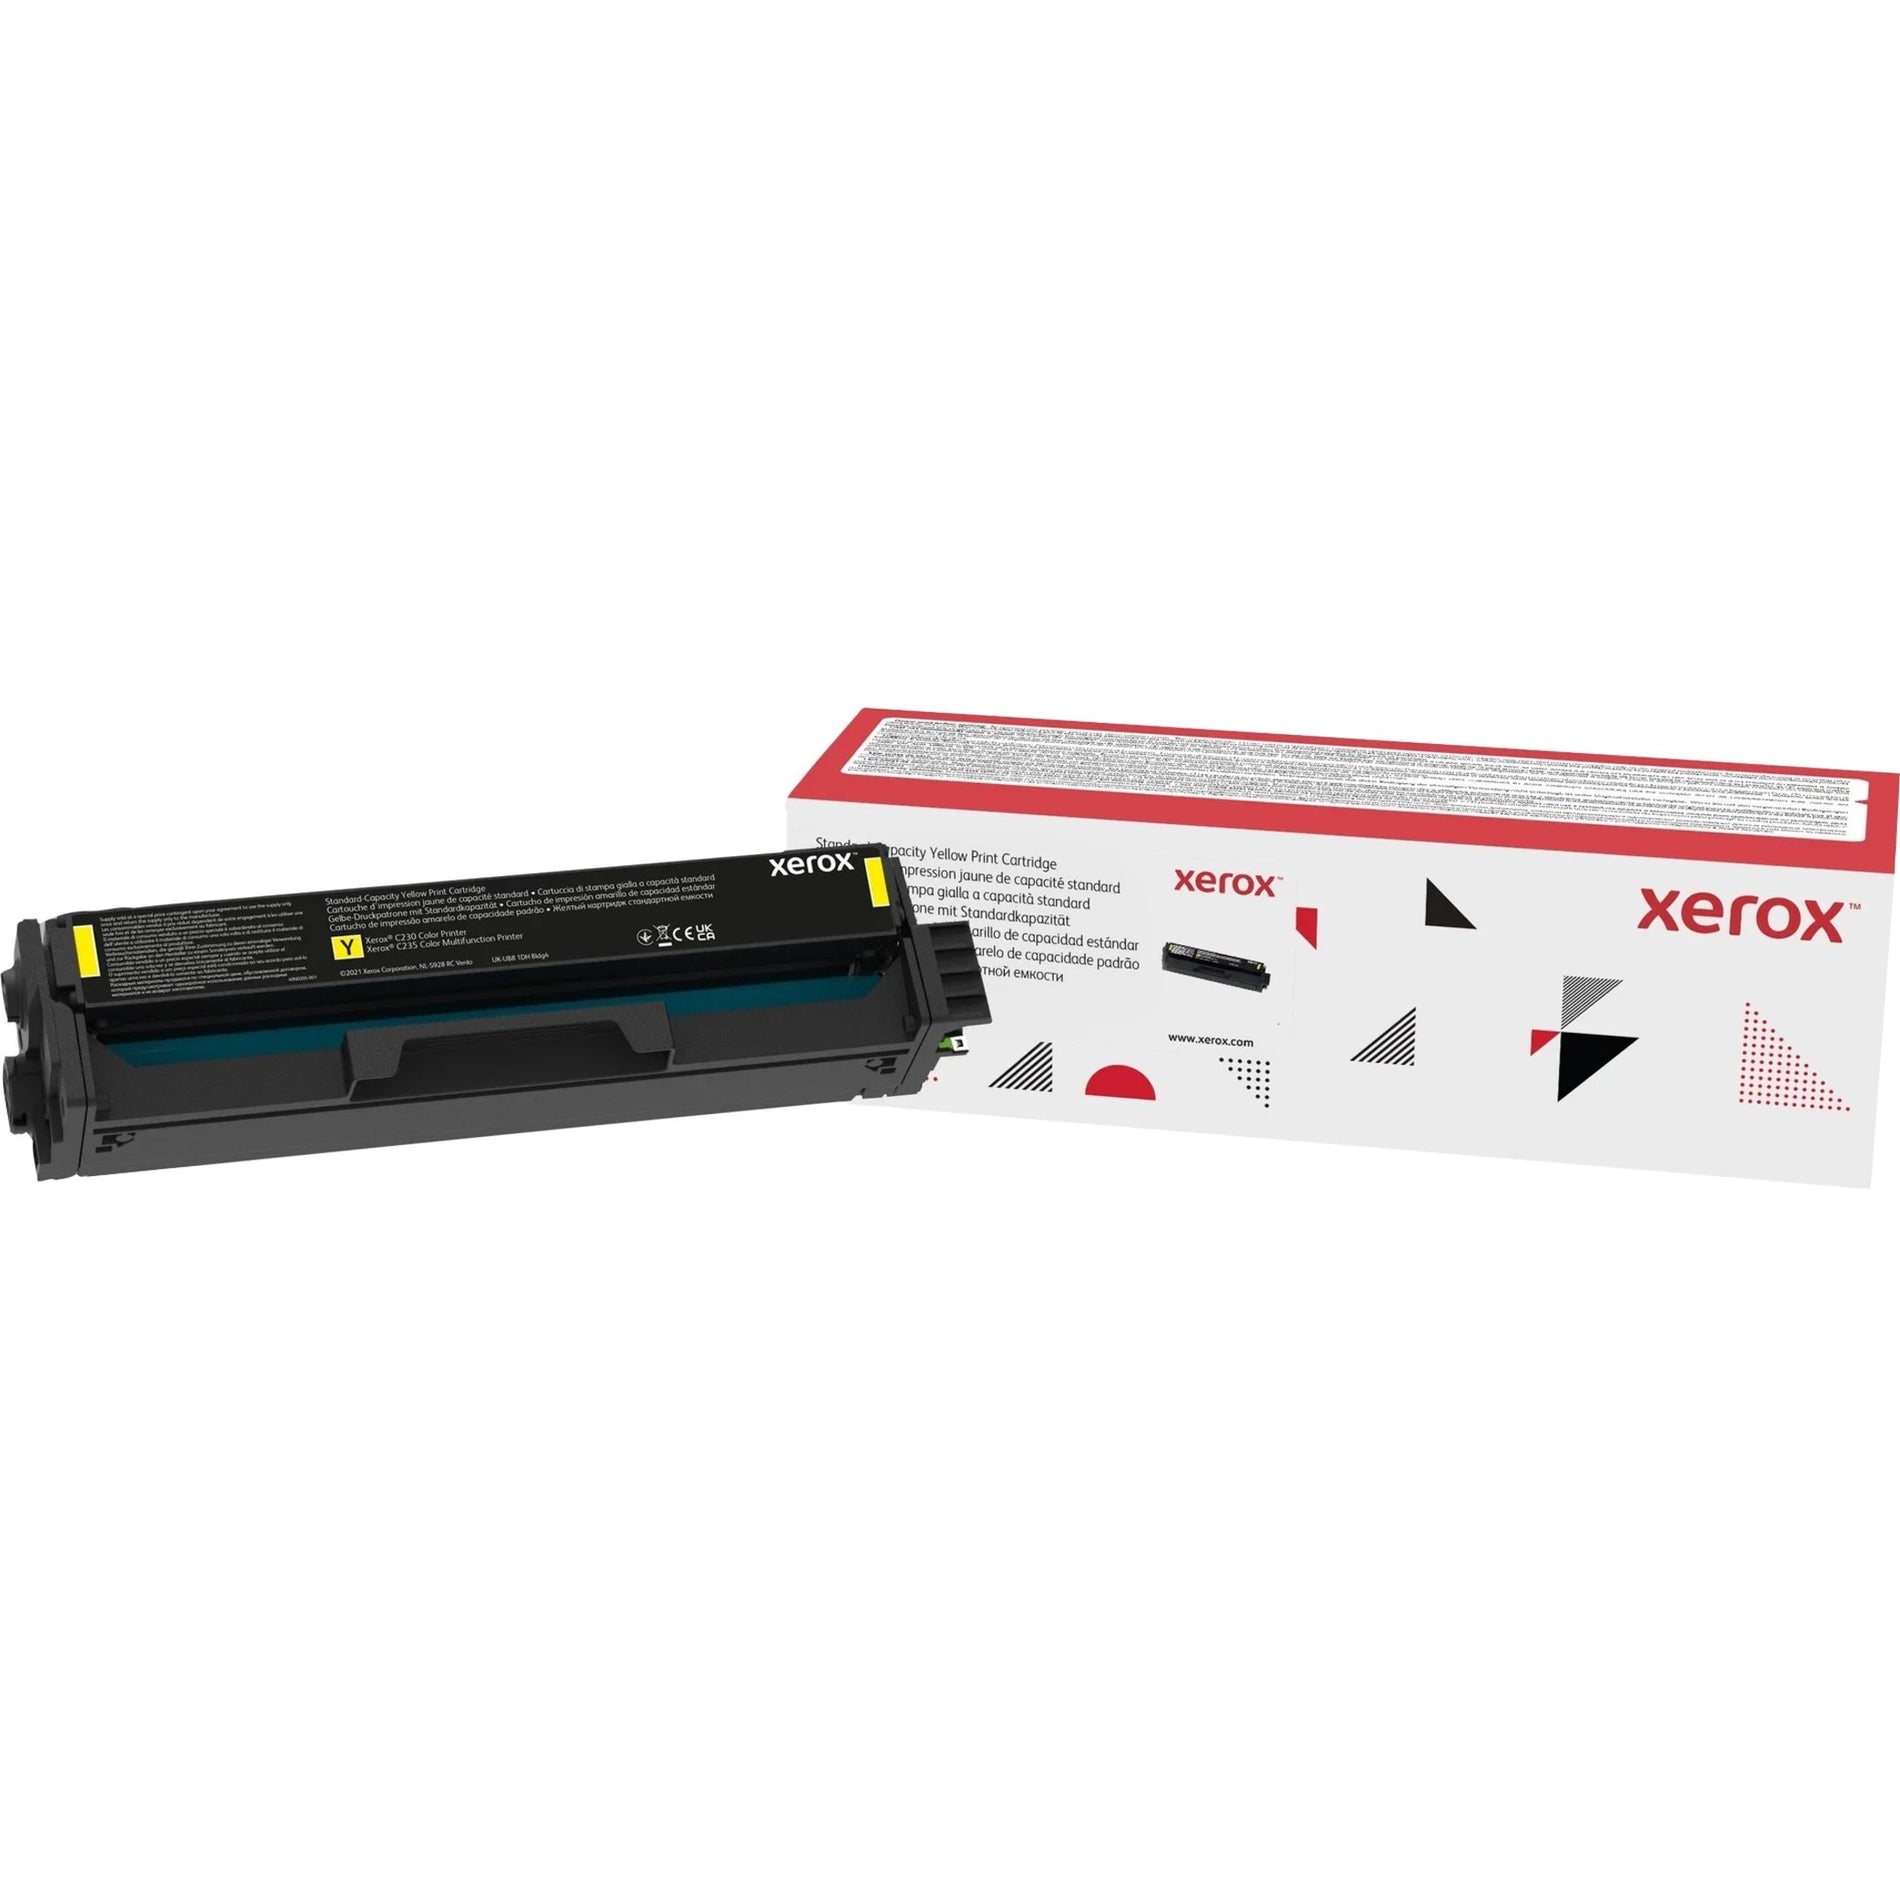 Xerox 006R04386 C230 / C235 Yellow Standard Capacity Toner Cartridge (1,500 pages), Original